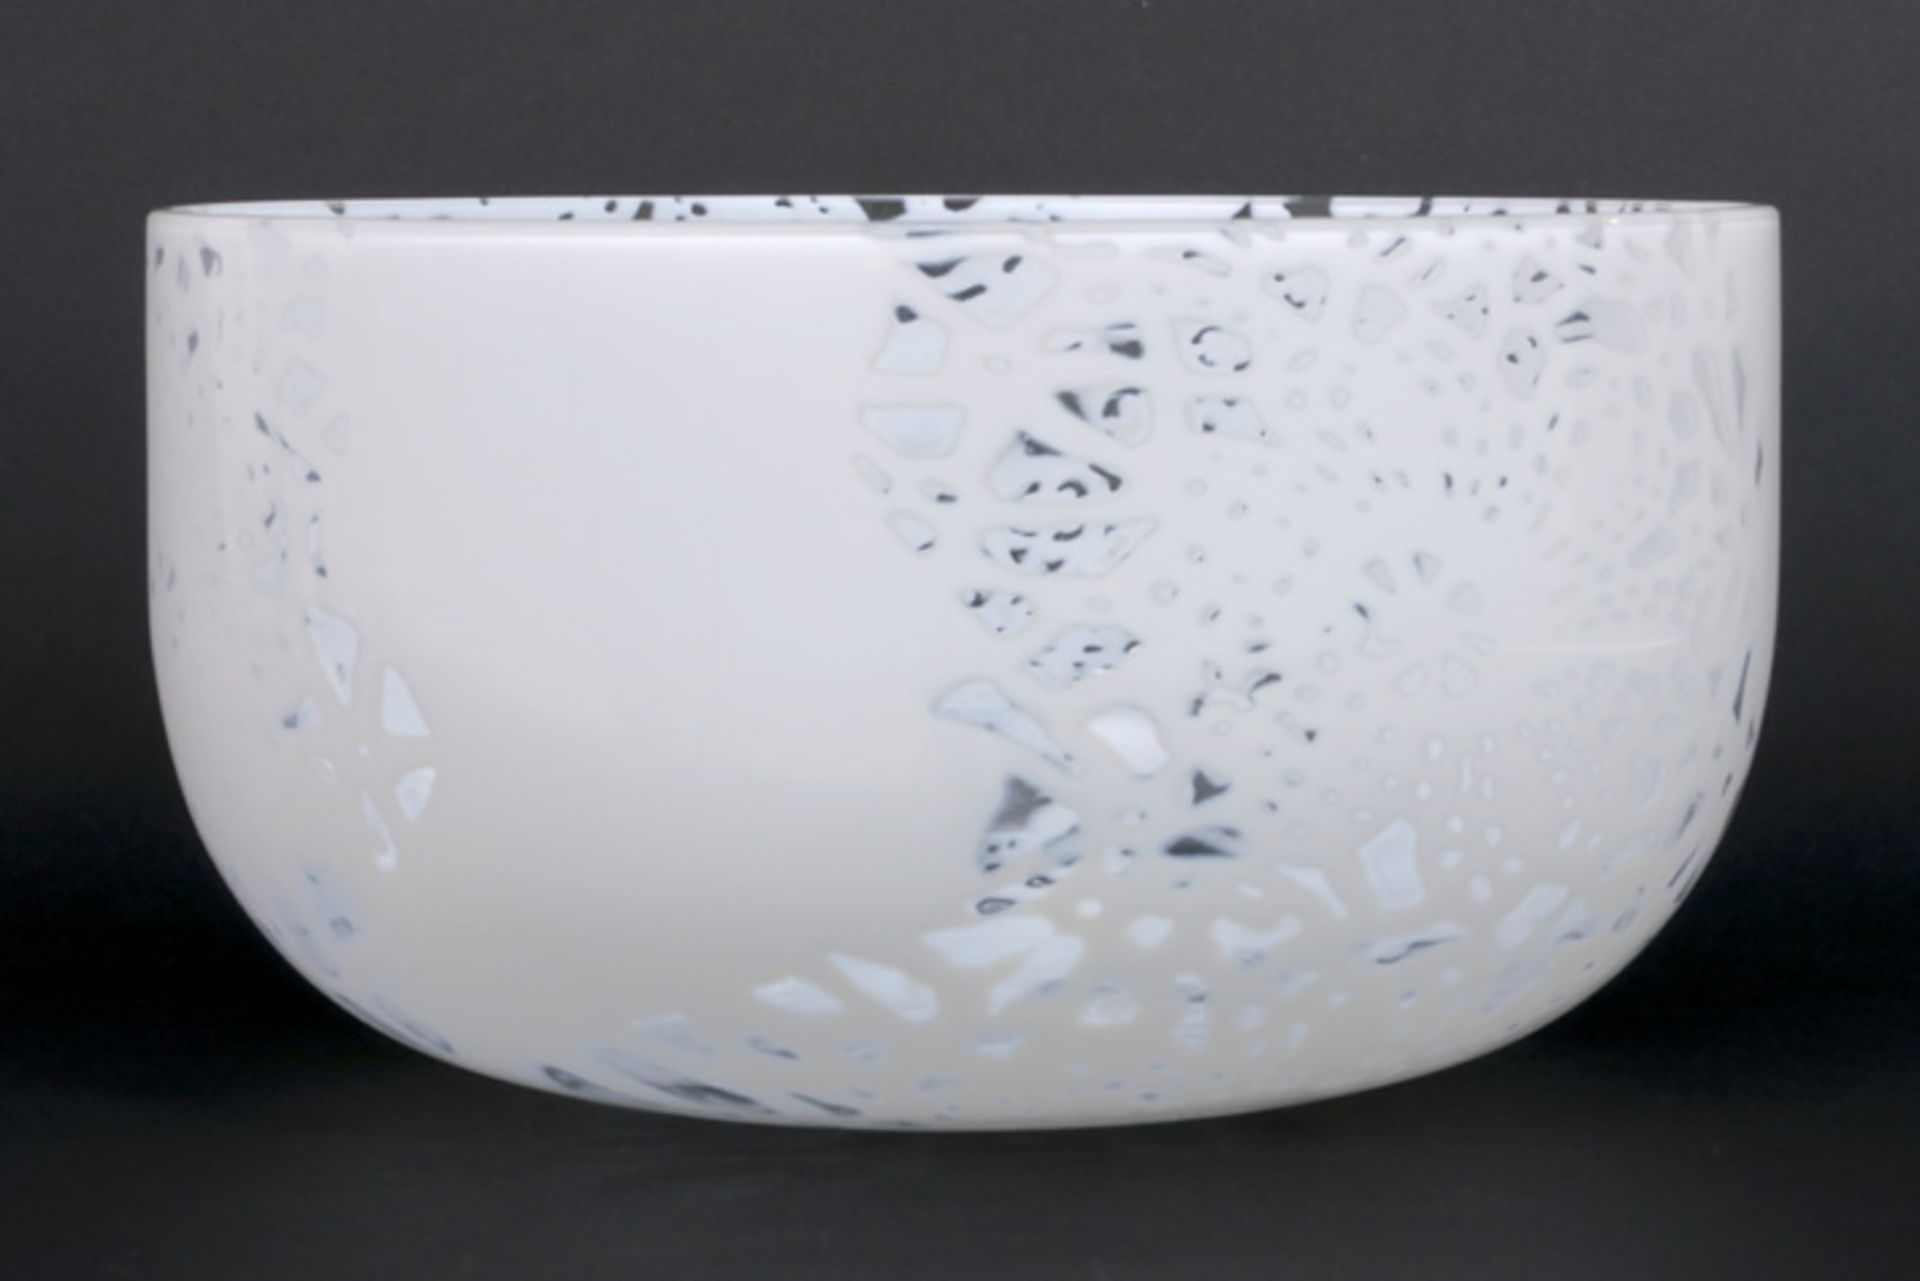 Ove Thorsen & Brigitee Carlsson "Merletto" design bowl in glass by Venini - signed (engraved) Venini - Image 2 of 4